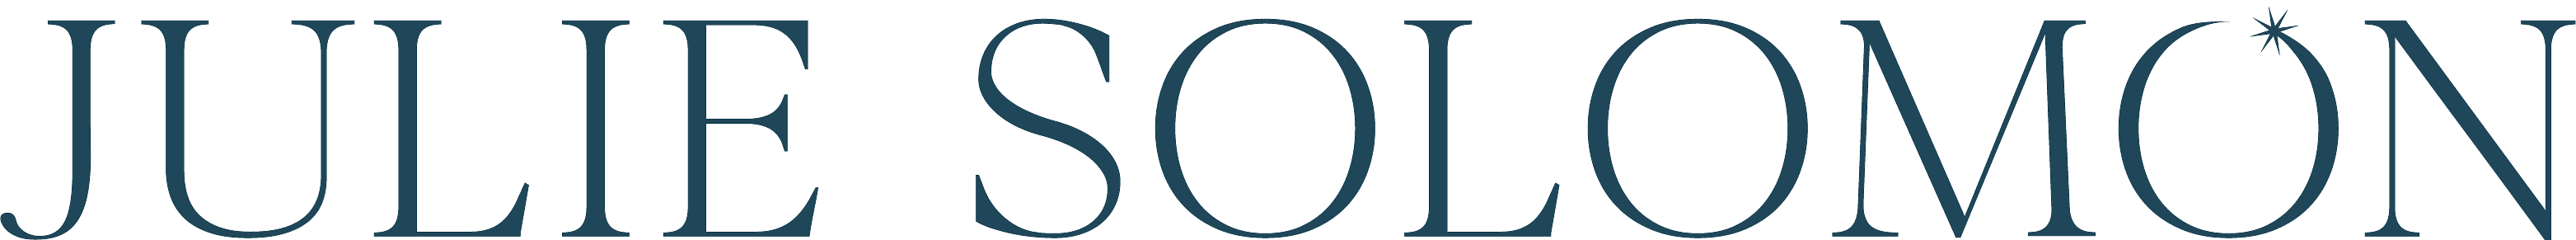 Julie Solomon logo